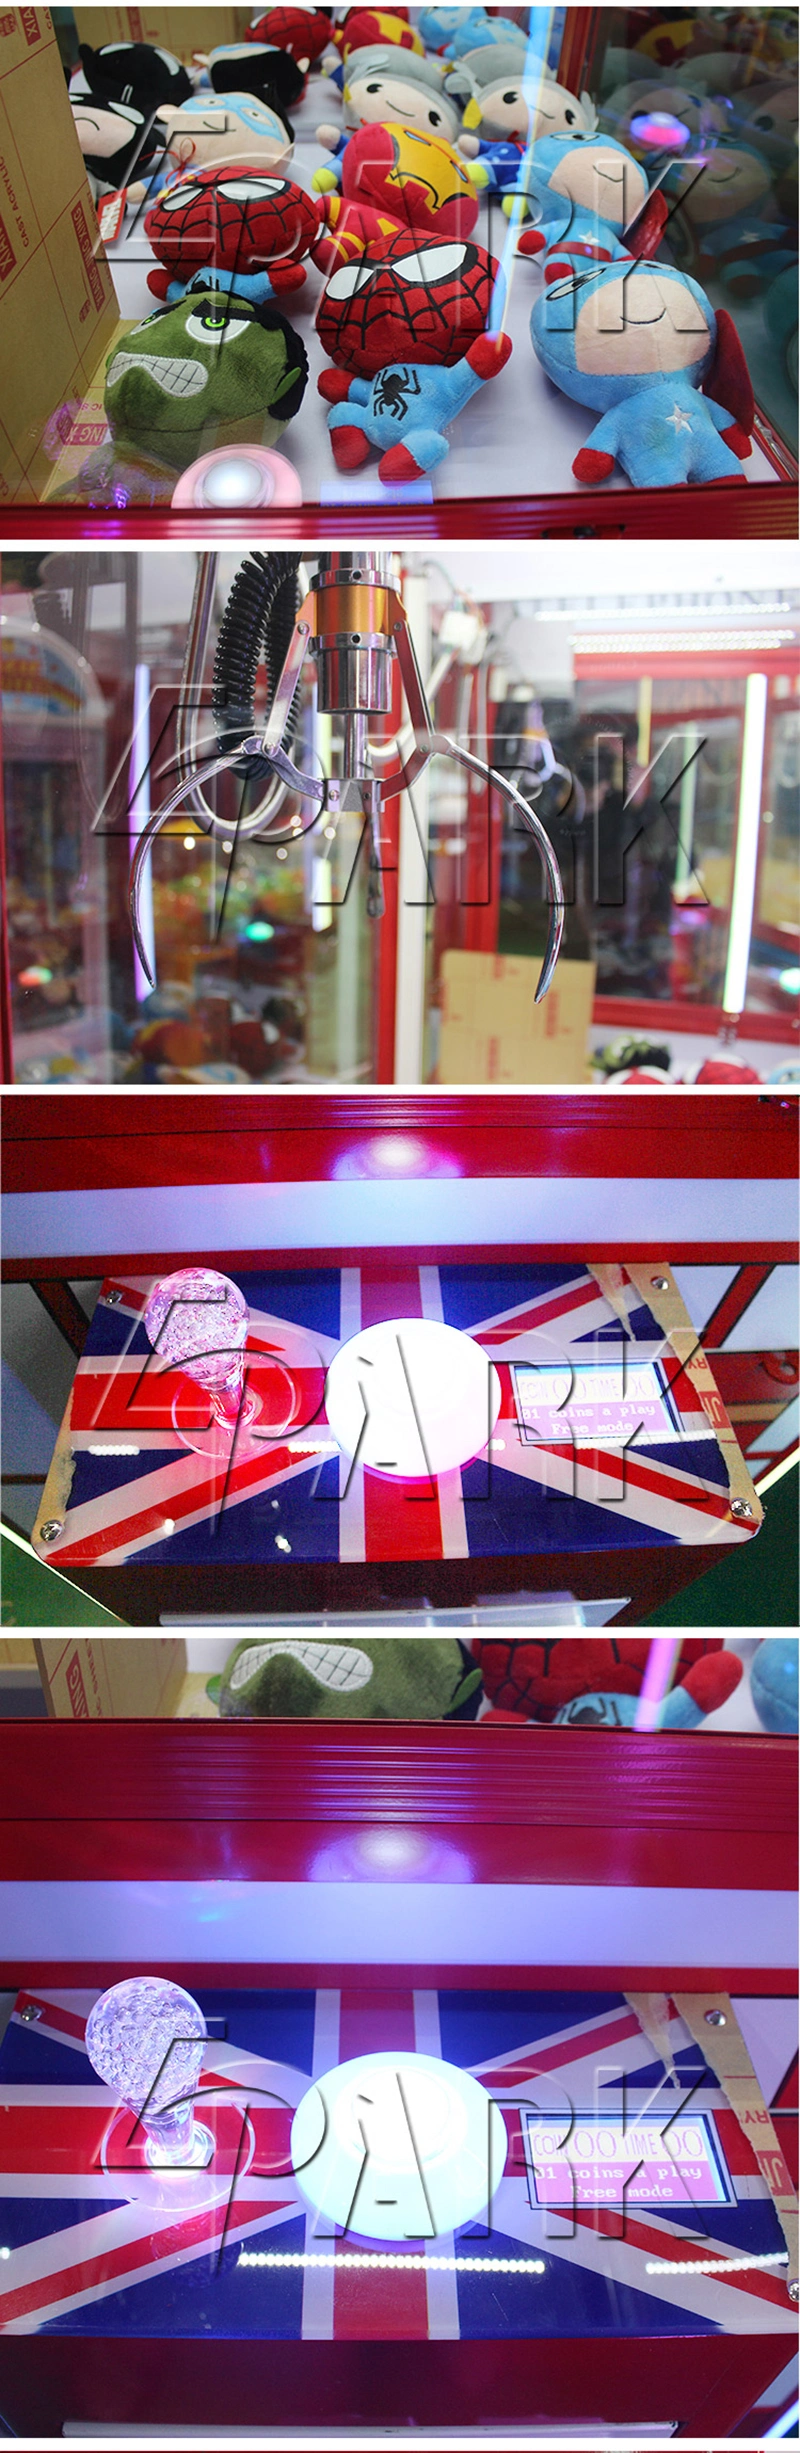 Big British Style Toy Claw Machine Vending Game Machines